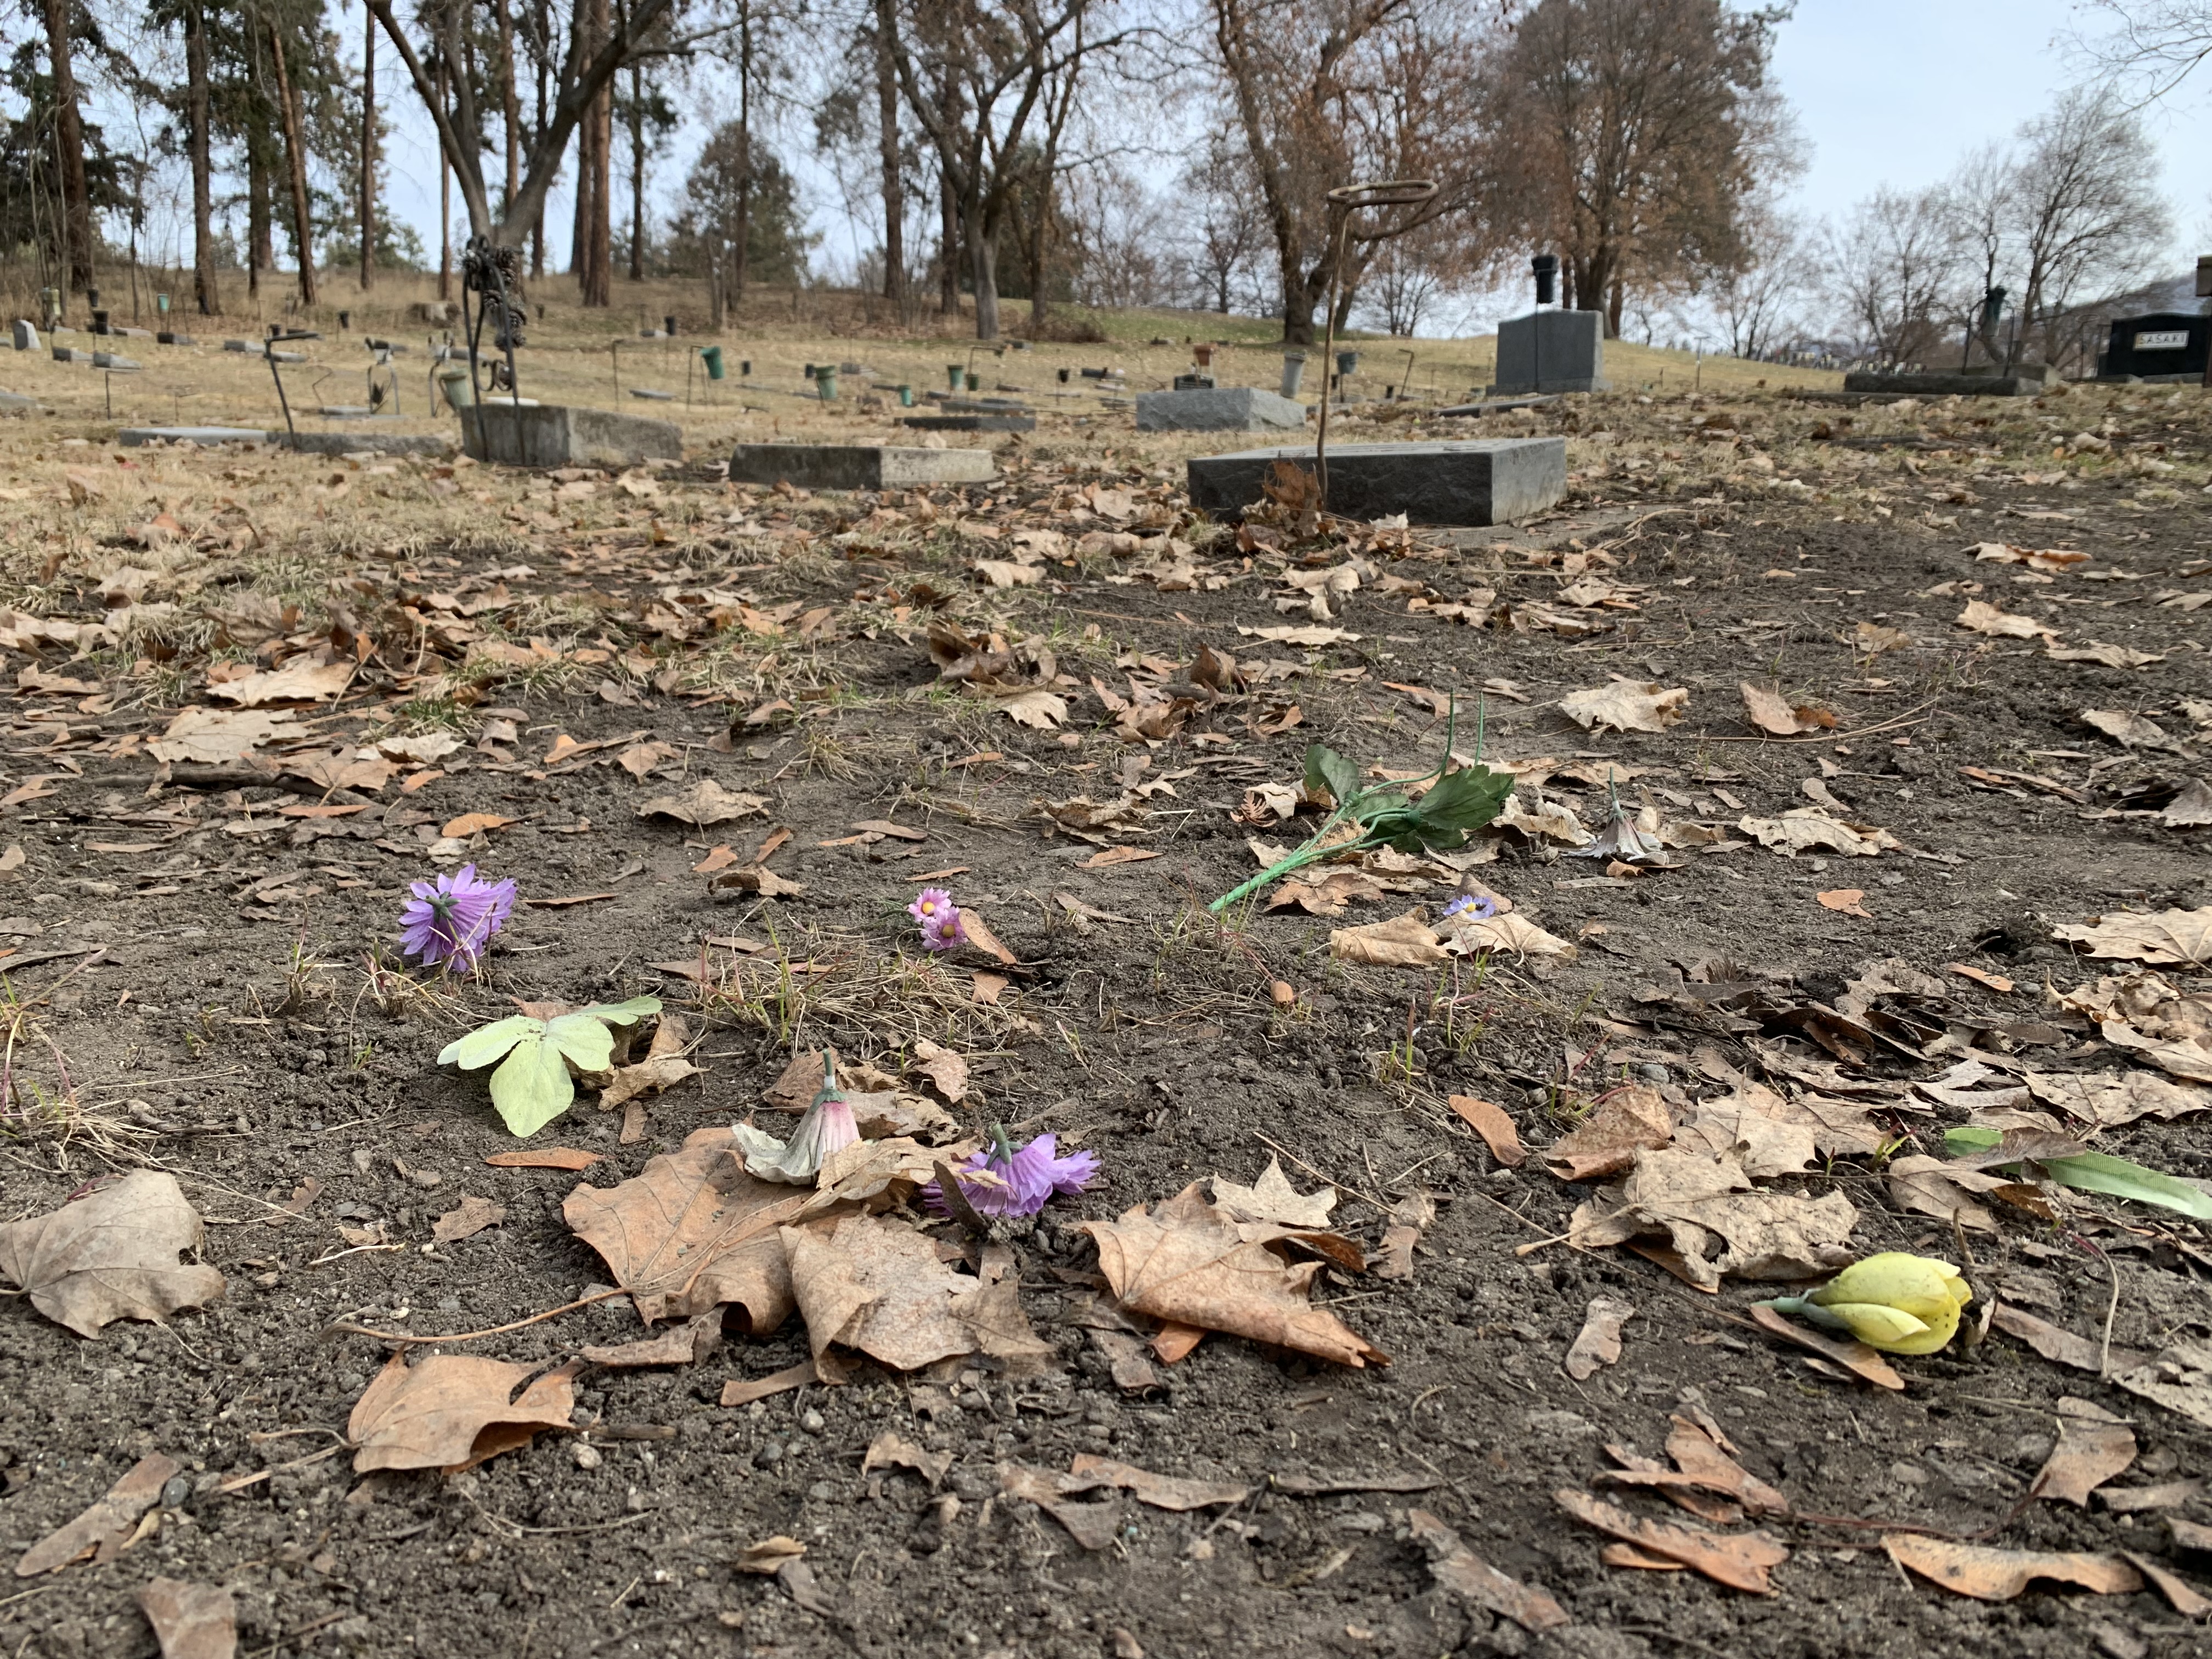 No trinkets, photos at grave-sites: City of Vernon